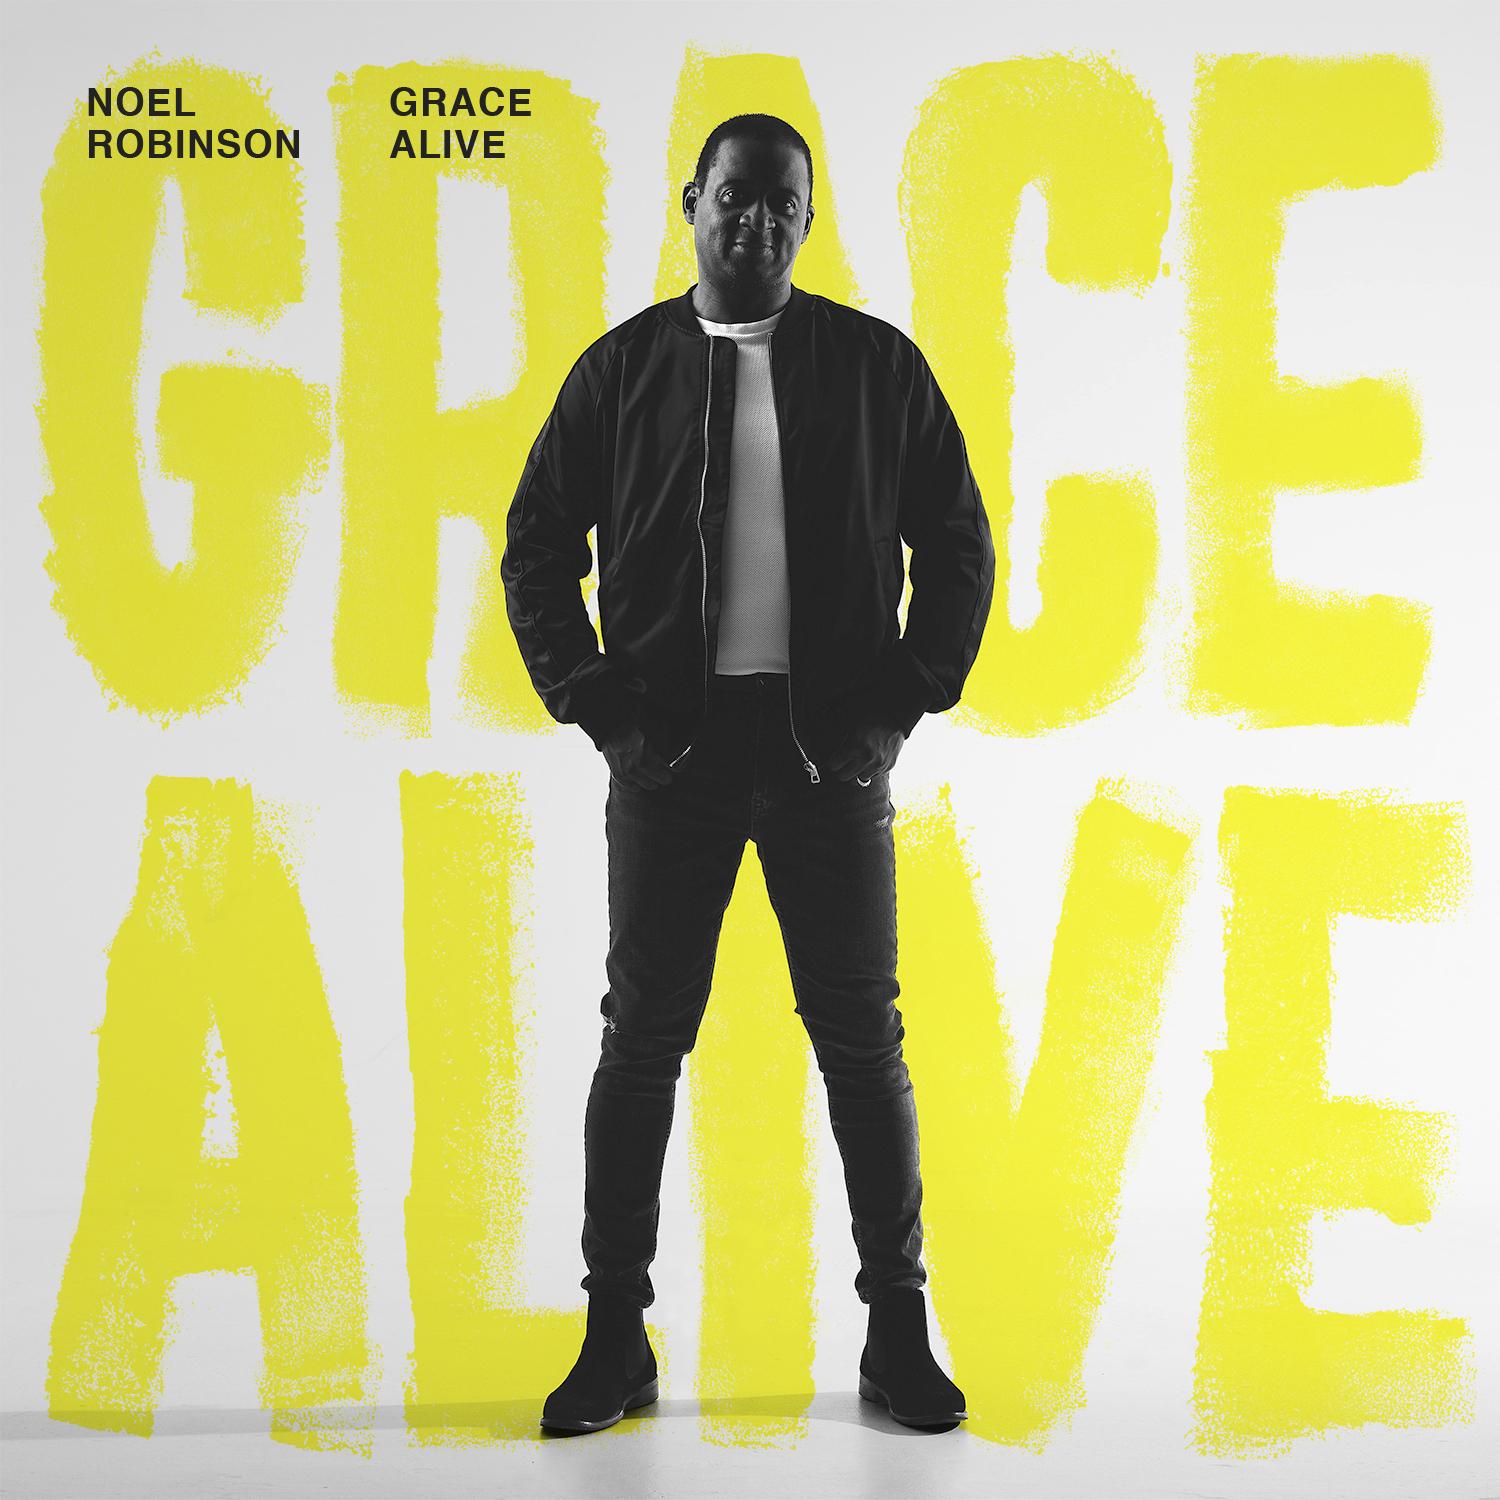 Noel Robinson - Grace Alive